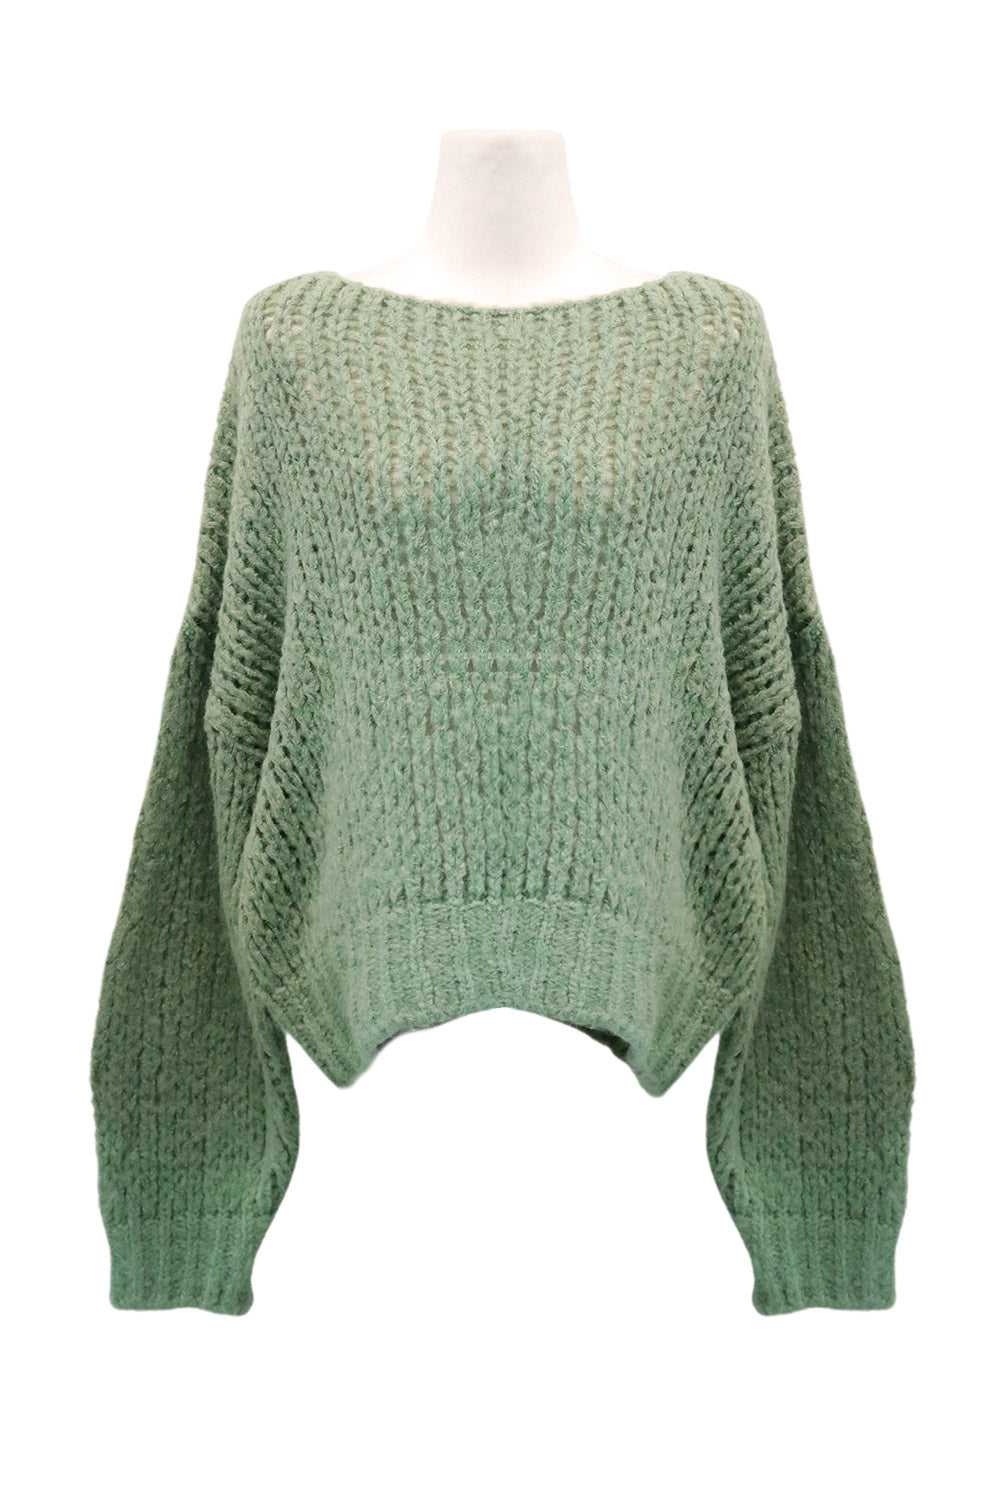 storets.com Emery Oversized Net Sweater